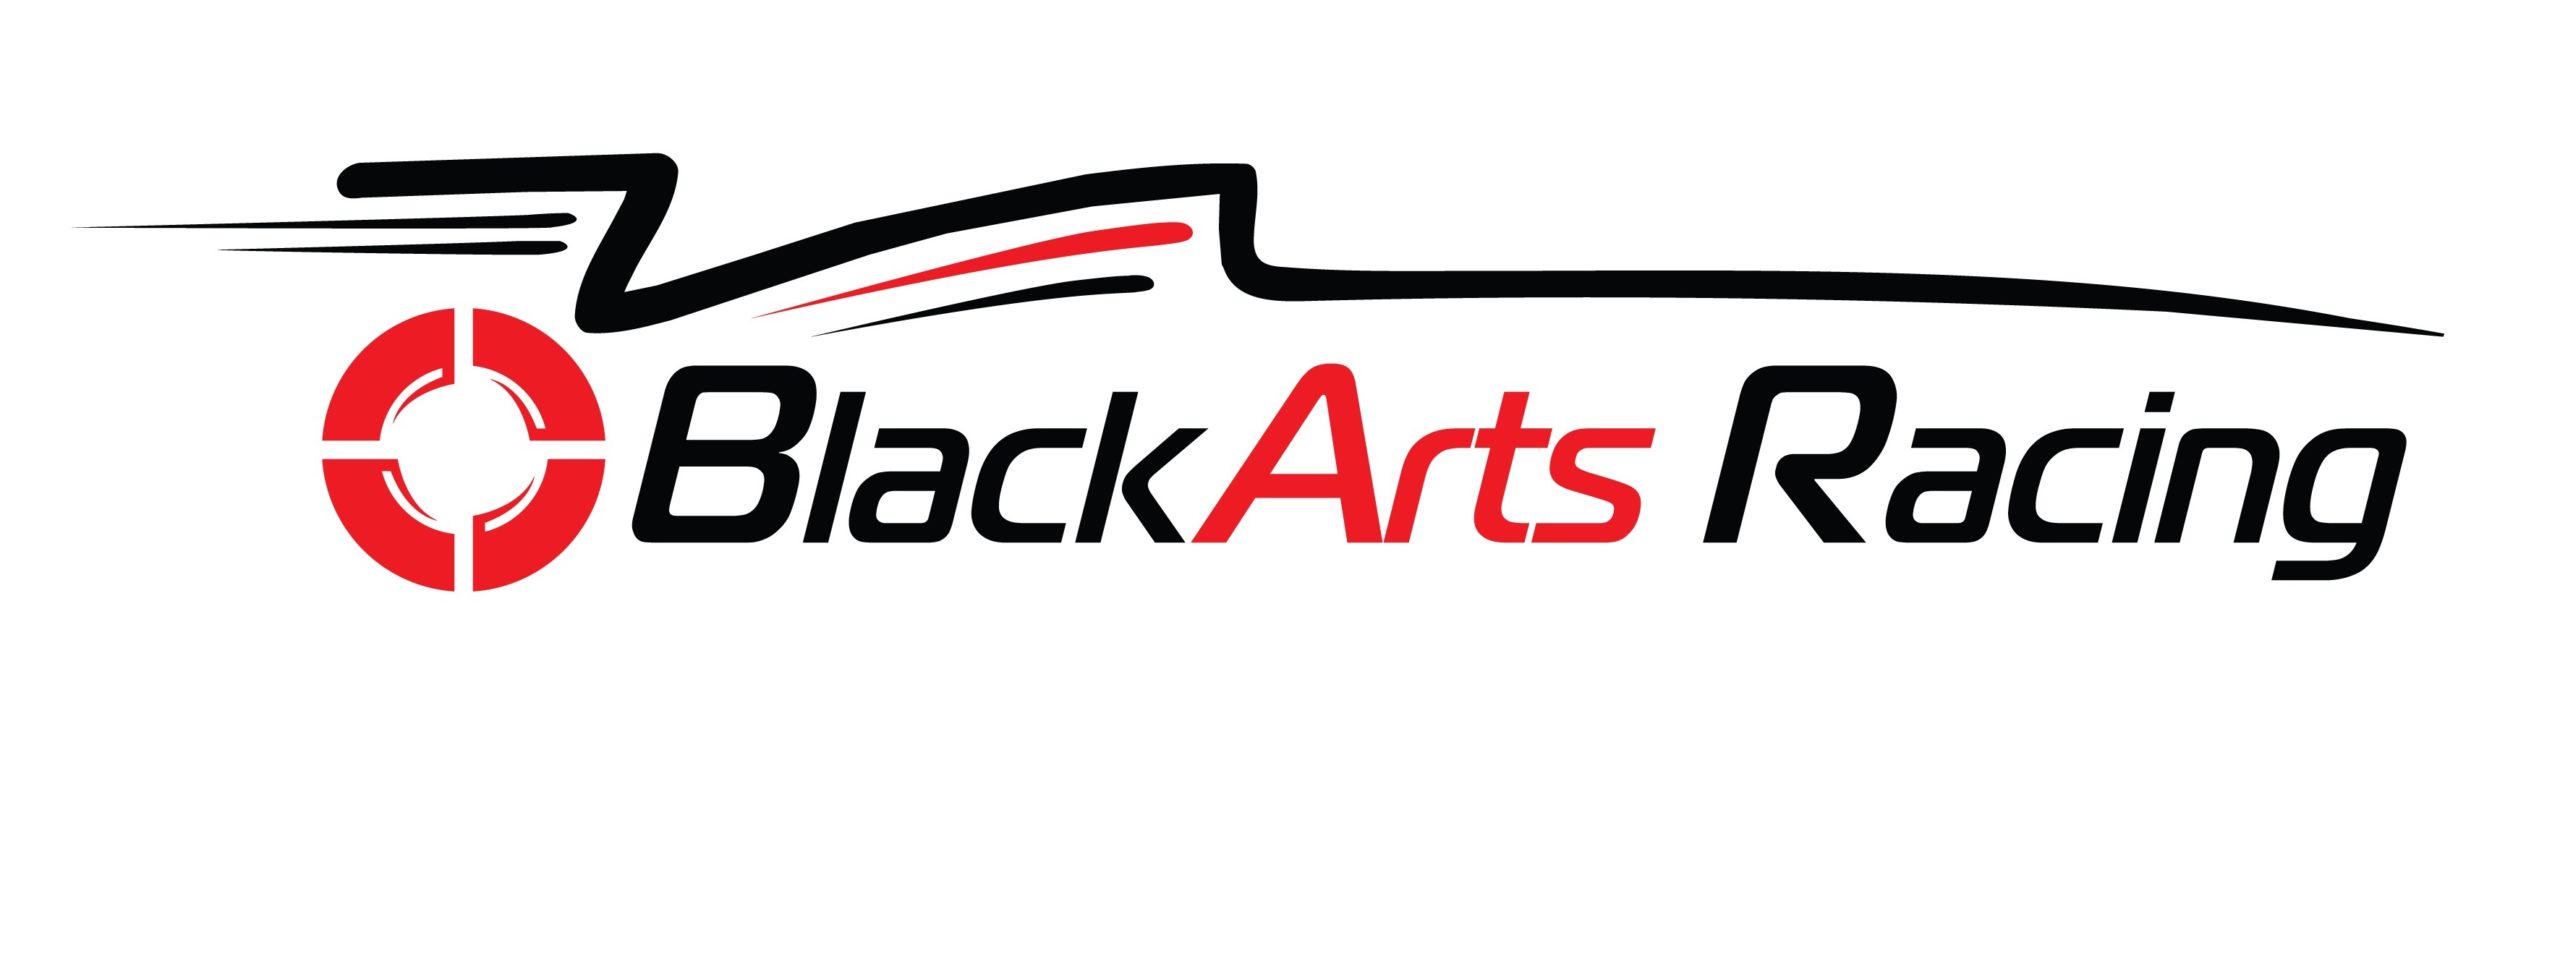 BlackArts Racing